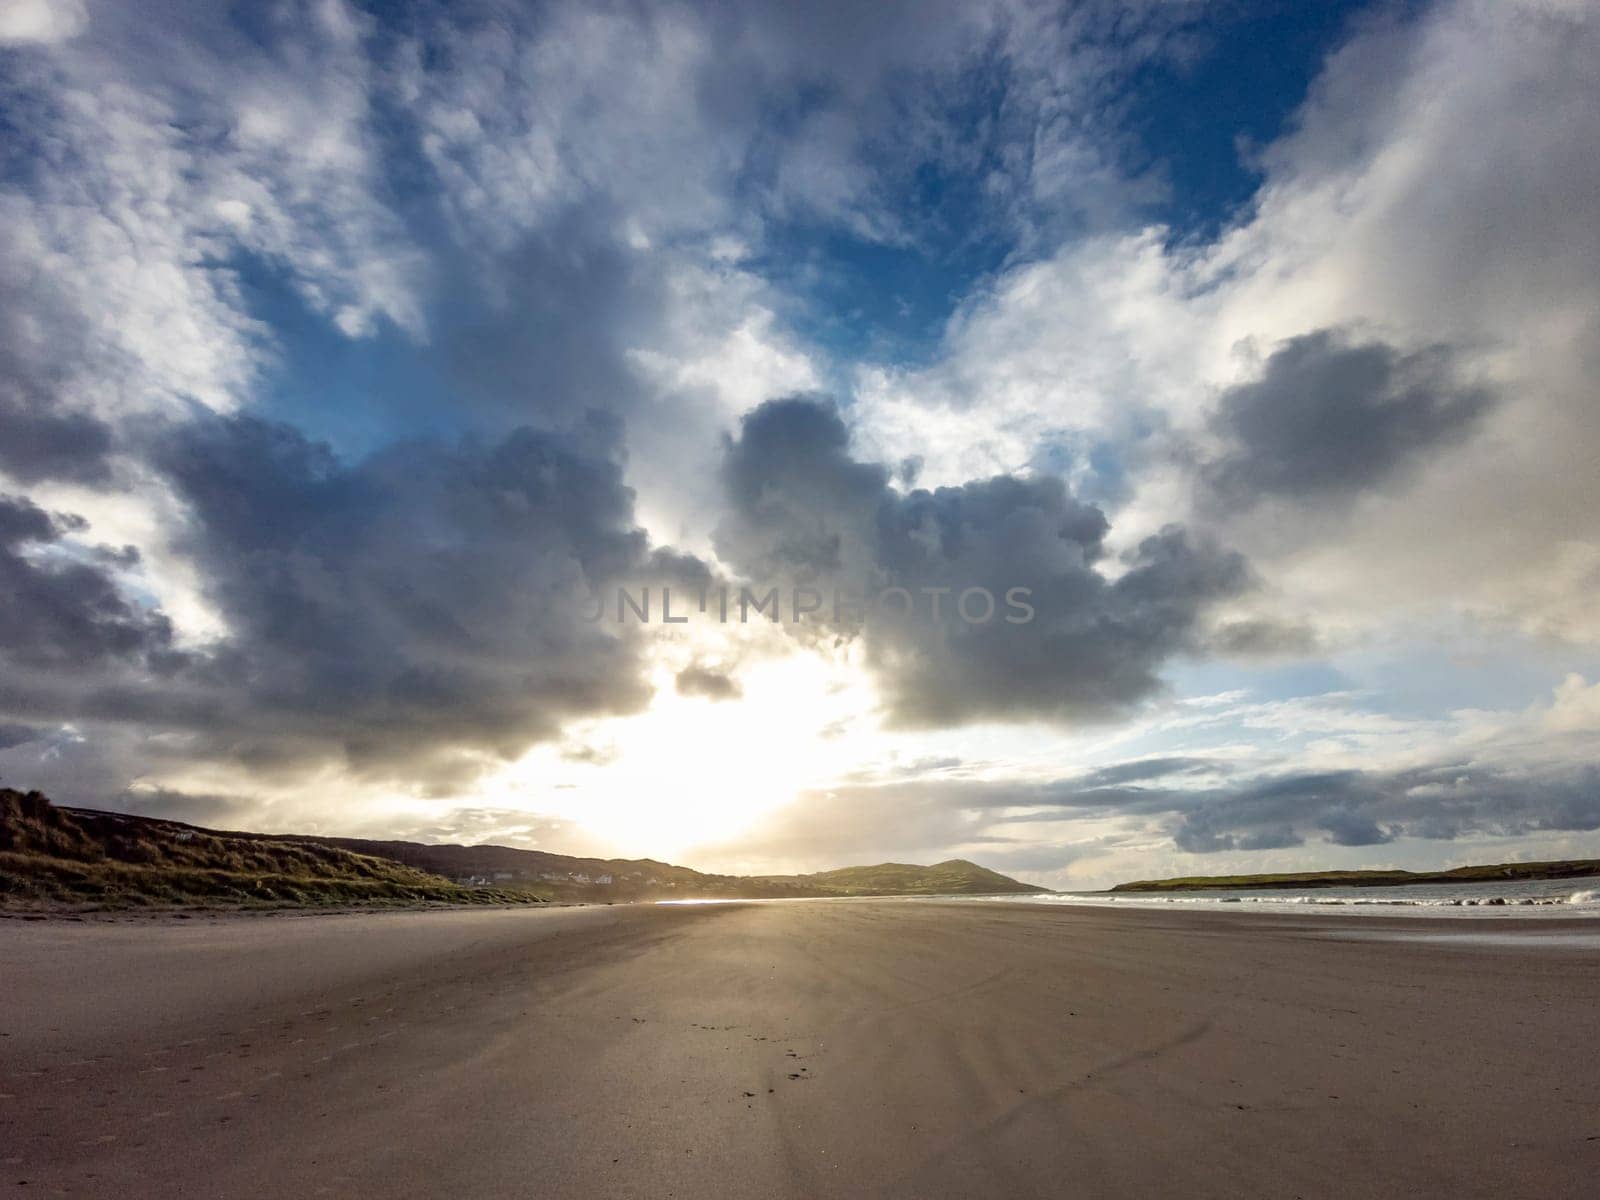 Dramatic sky at Portnoo Narin beach in County Donegal - Ireland.